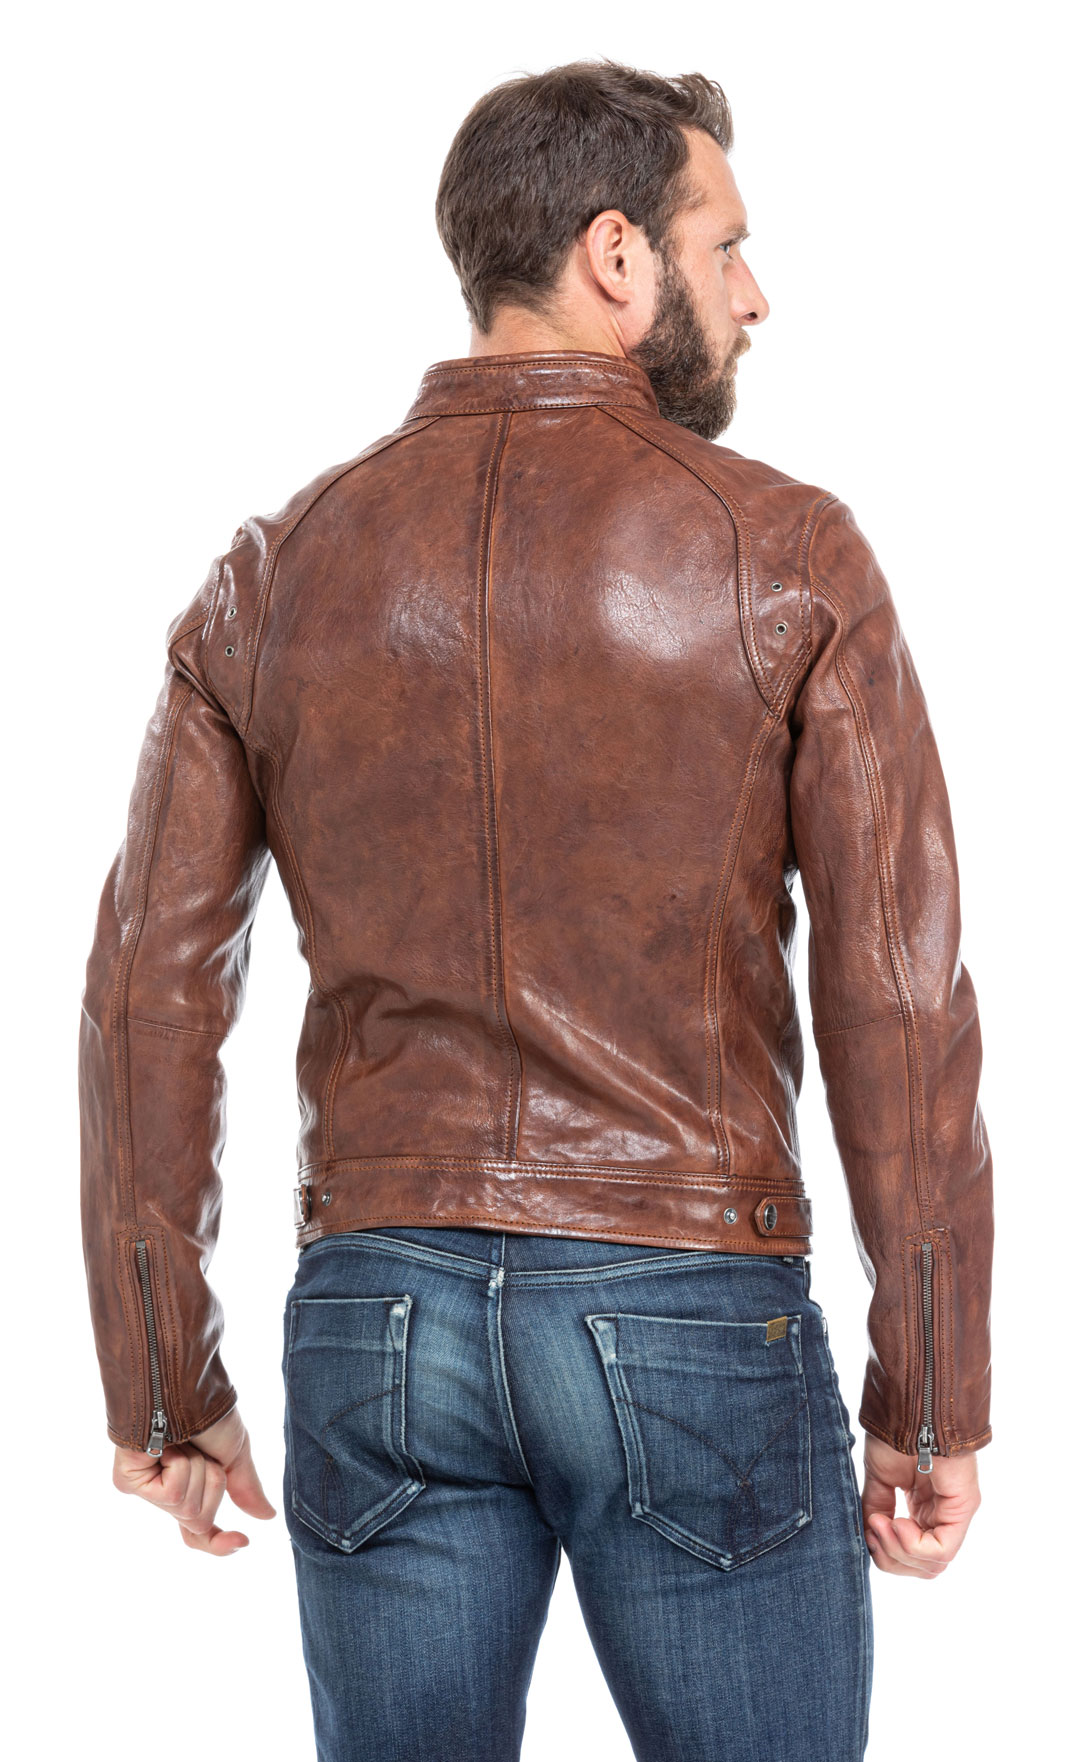 US Men Leather Jacket Hommes veste cuir Herren Lederjacke chaqueta de cuero Q22b